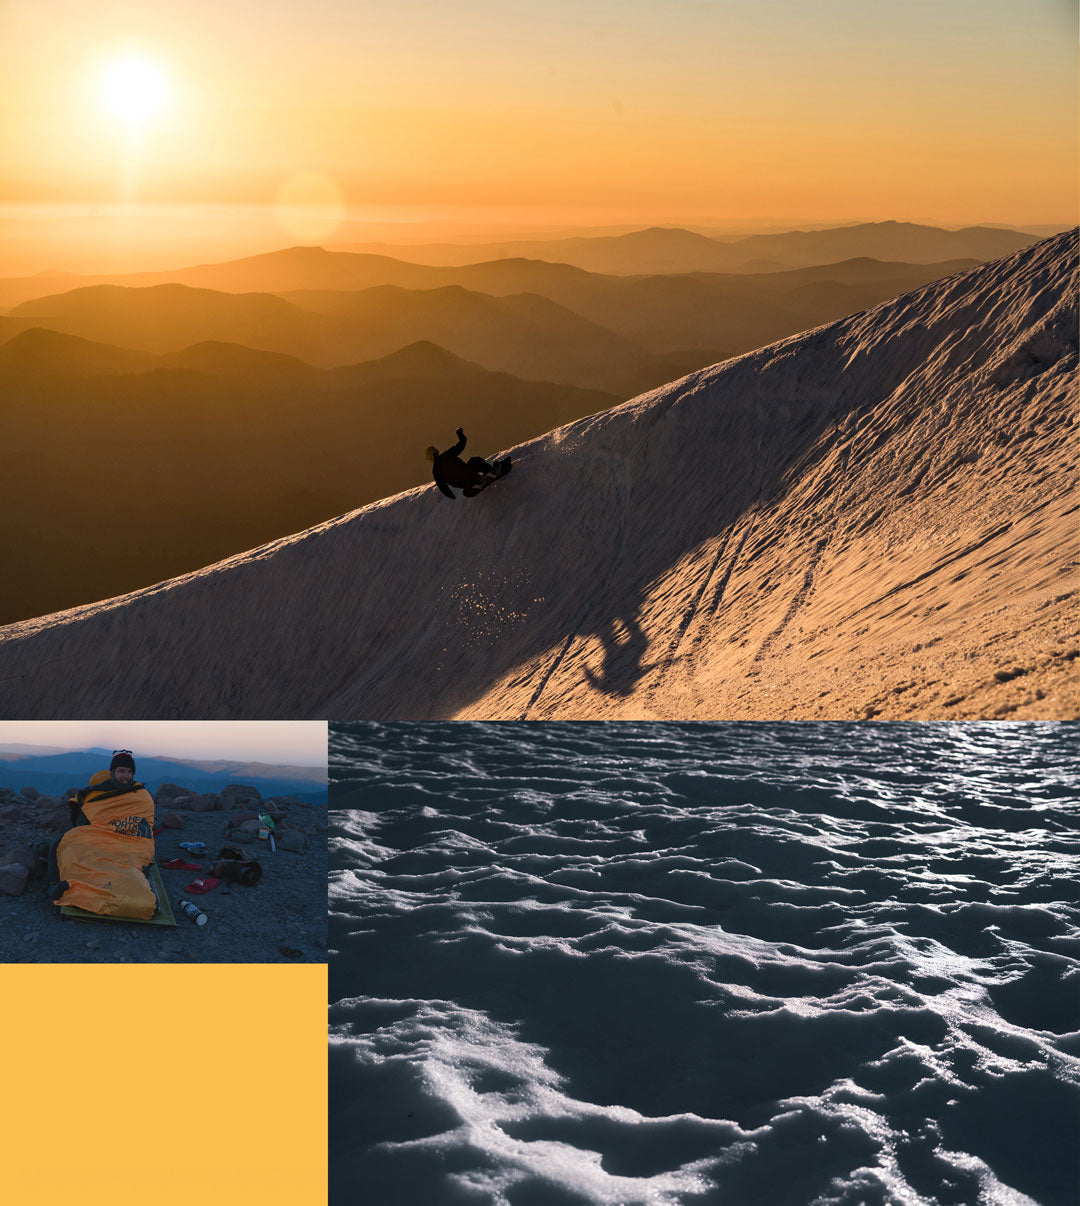 season nexus snowboard | season eqpt | the best snowboard for all